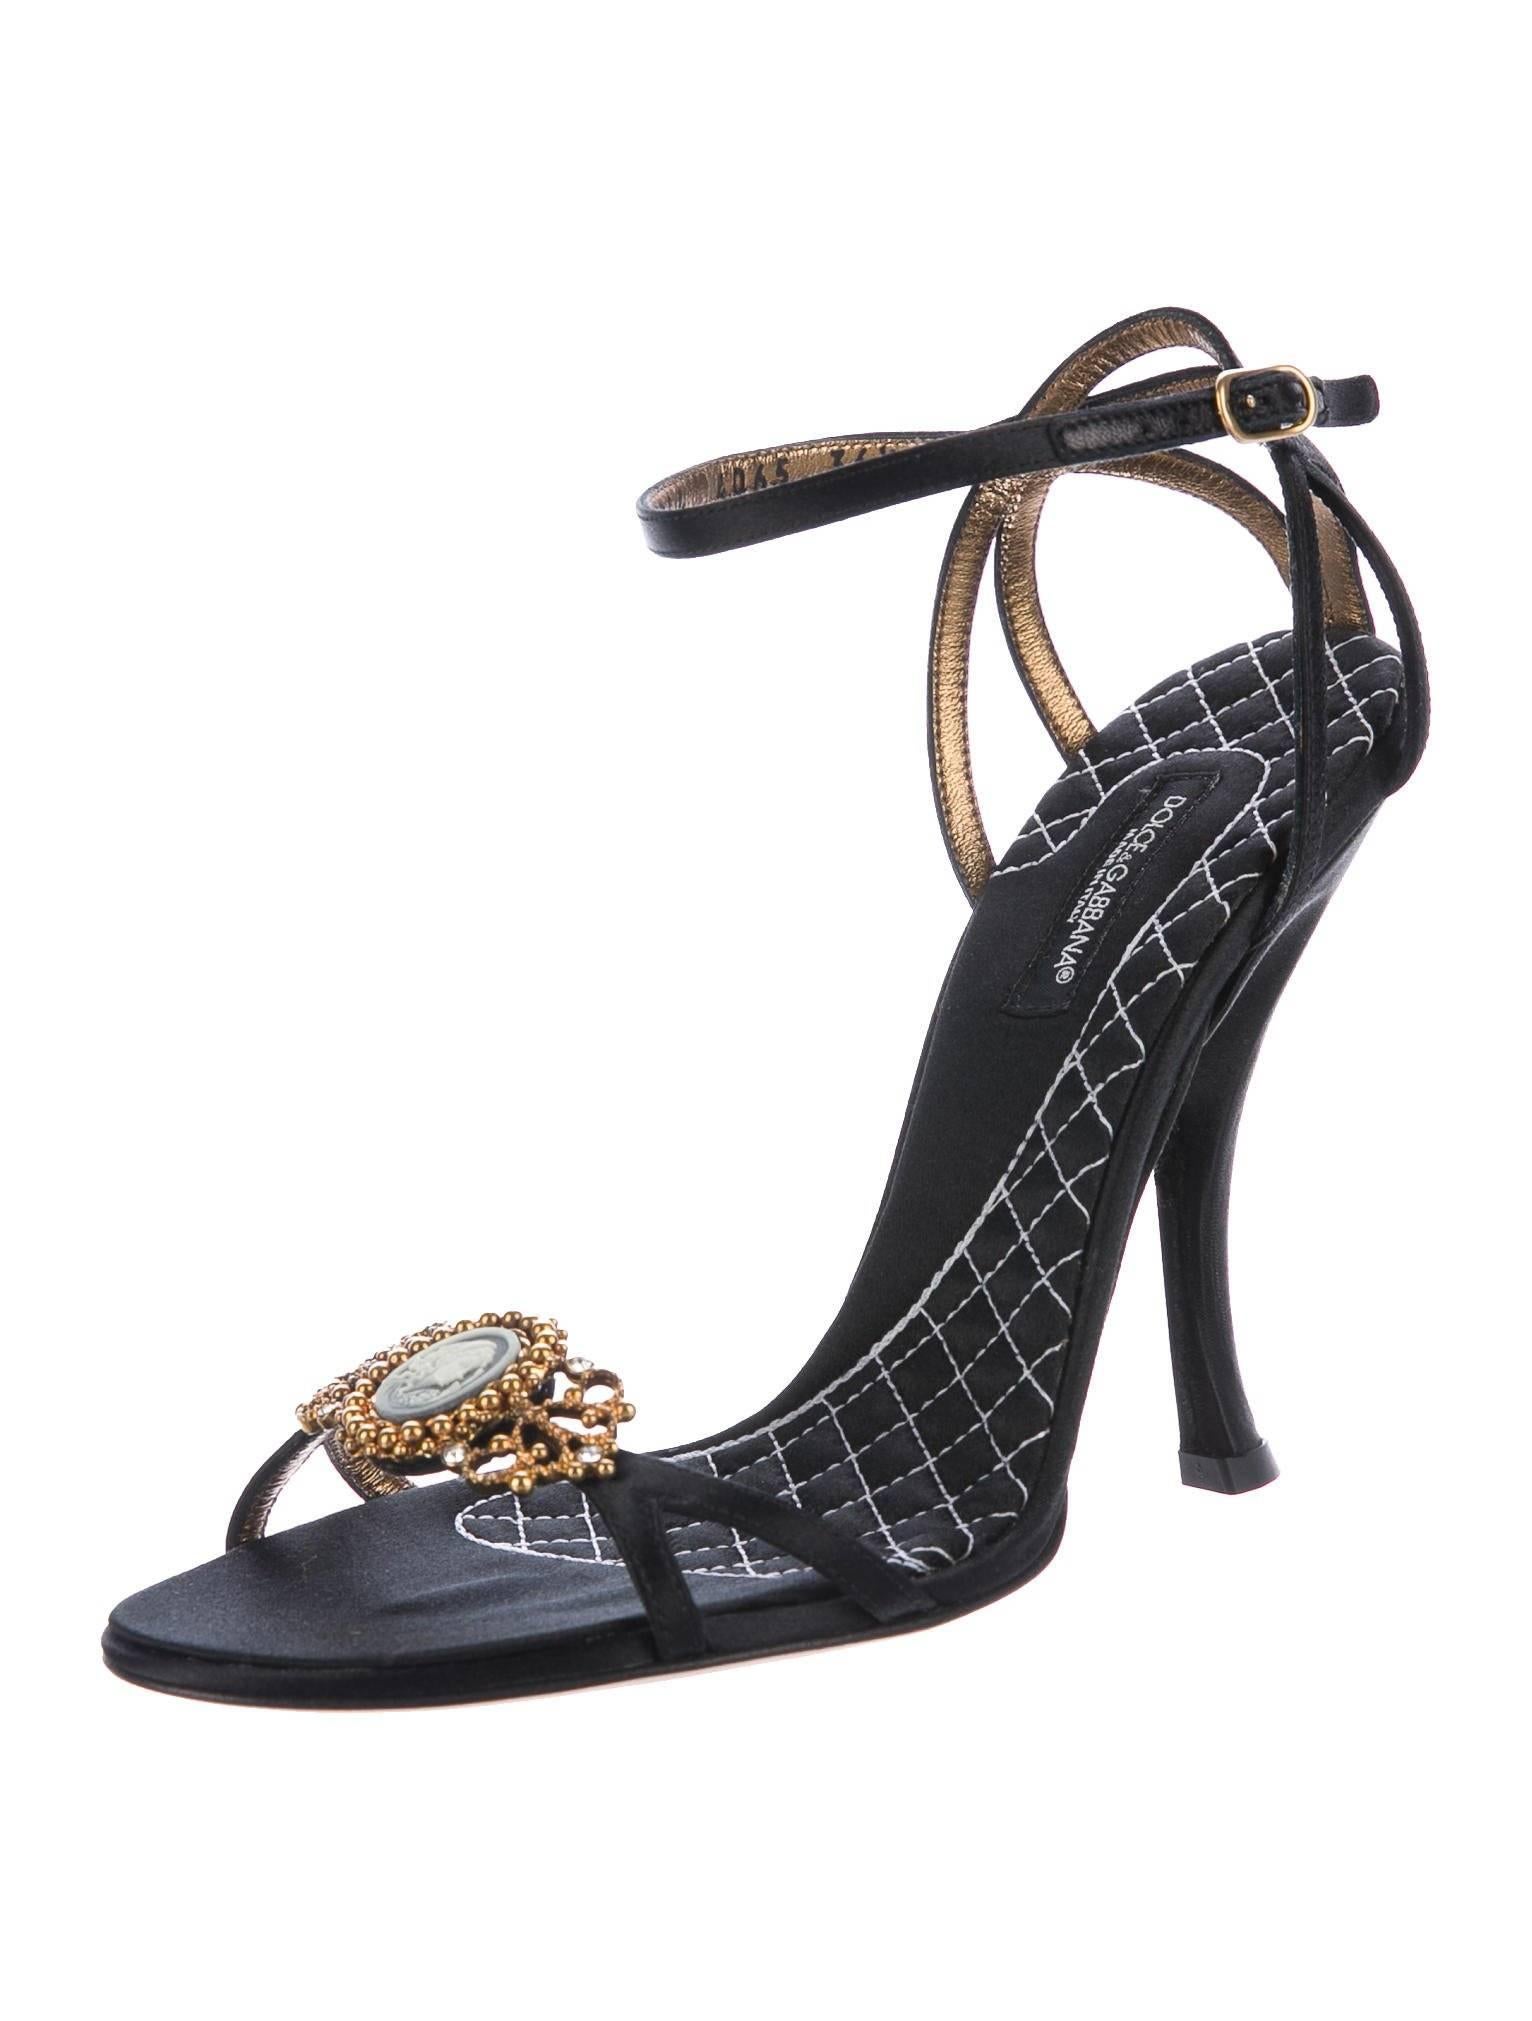 Black Dolce & Gabbana New Satin Cameo Charm Evening Sandals Heels in Box